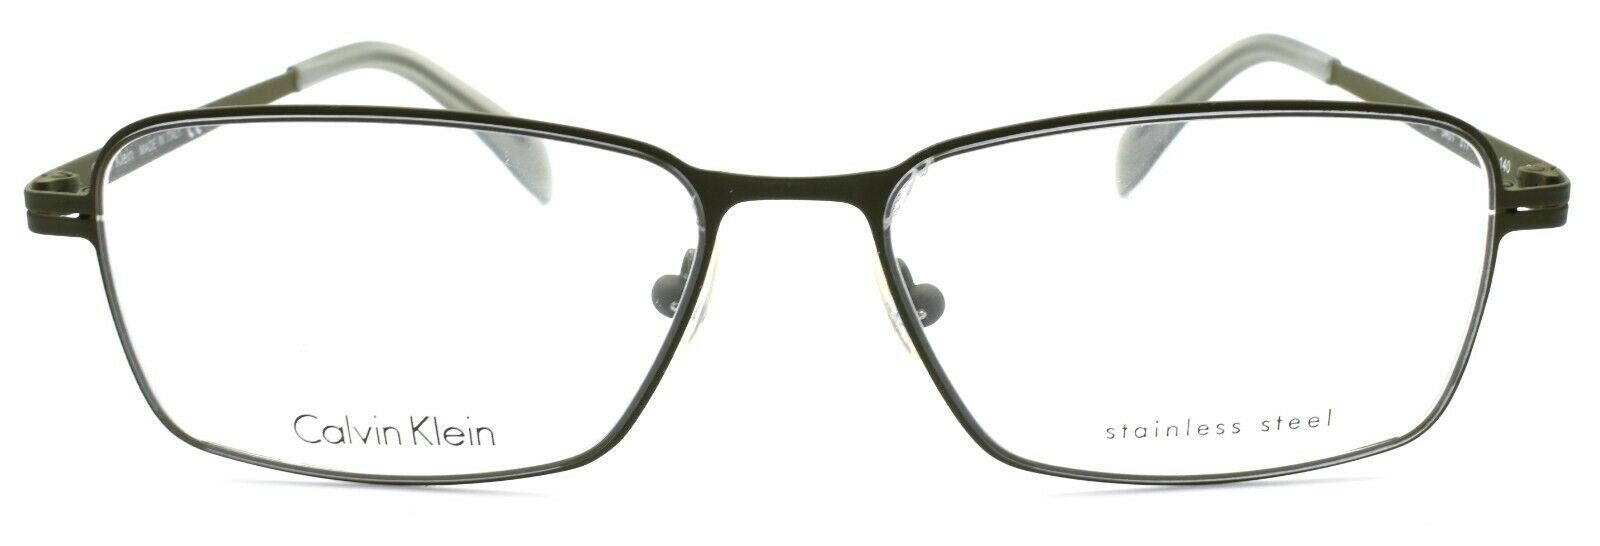 2-Calvin Klein CK5401 317 Men's Eyeglasses Frames 55-16-140 Military Green ITALY-750779068274-IKSpecs